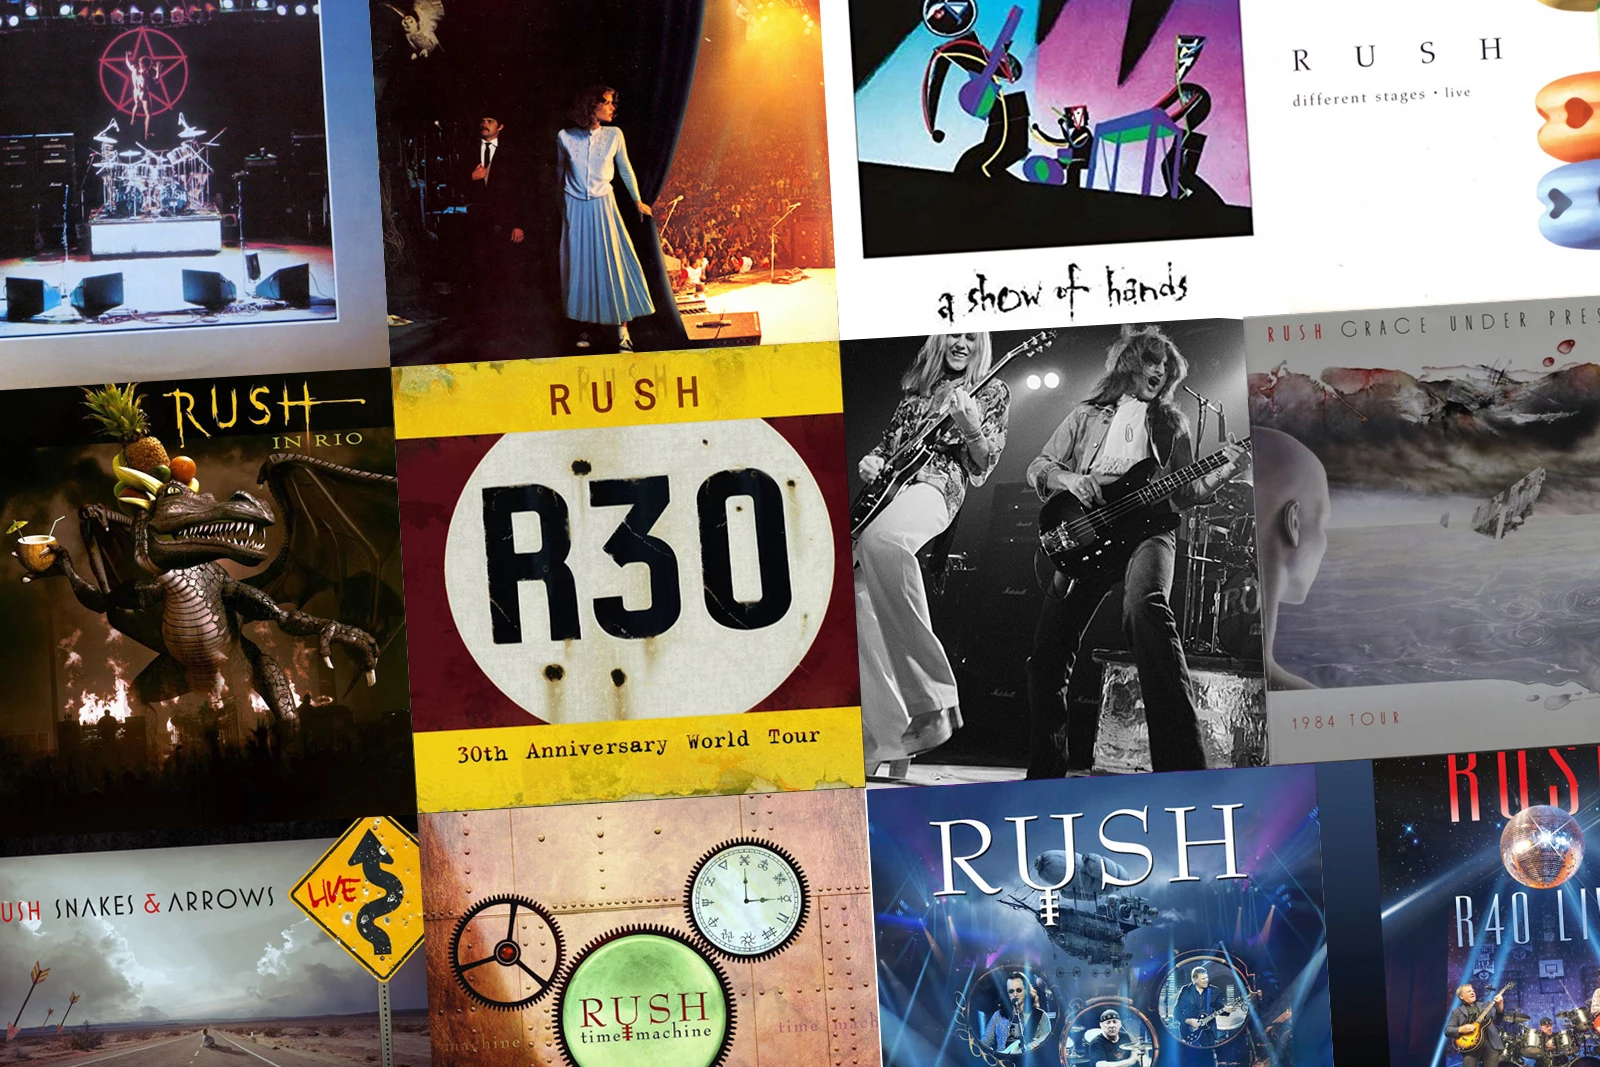 best rush songs ranked